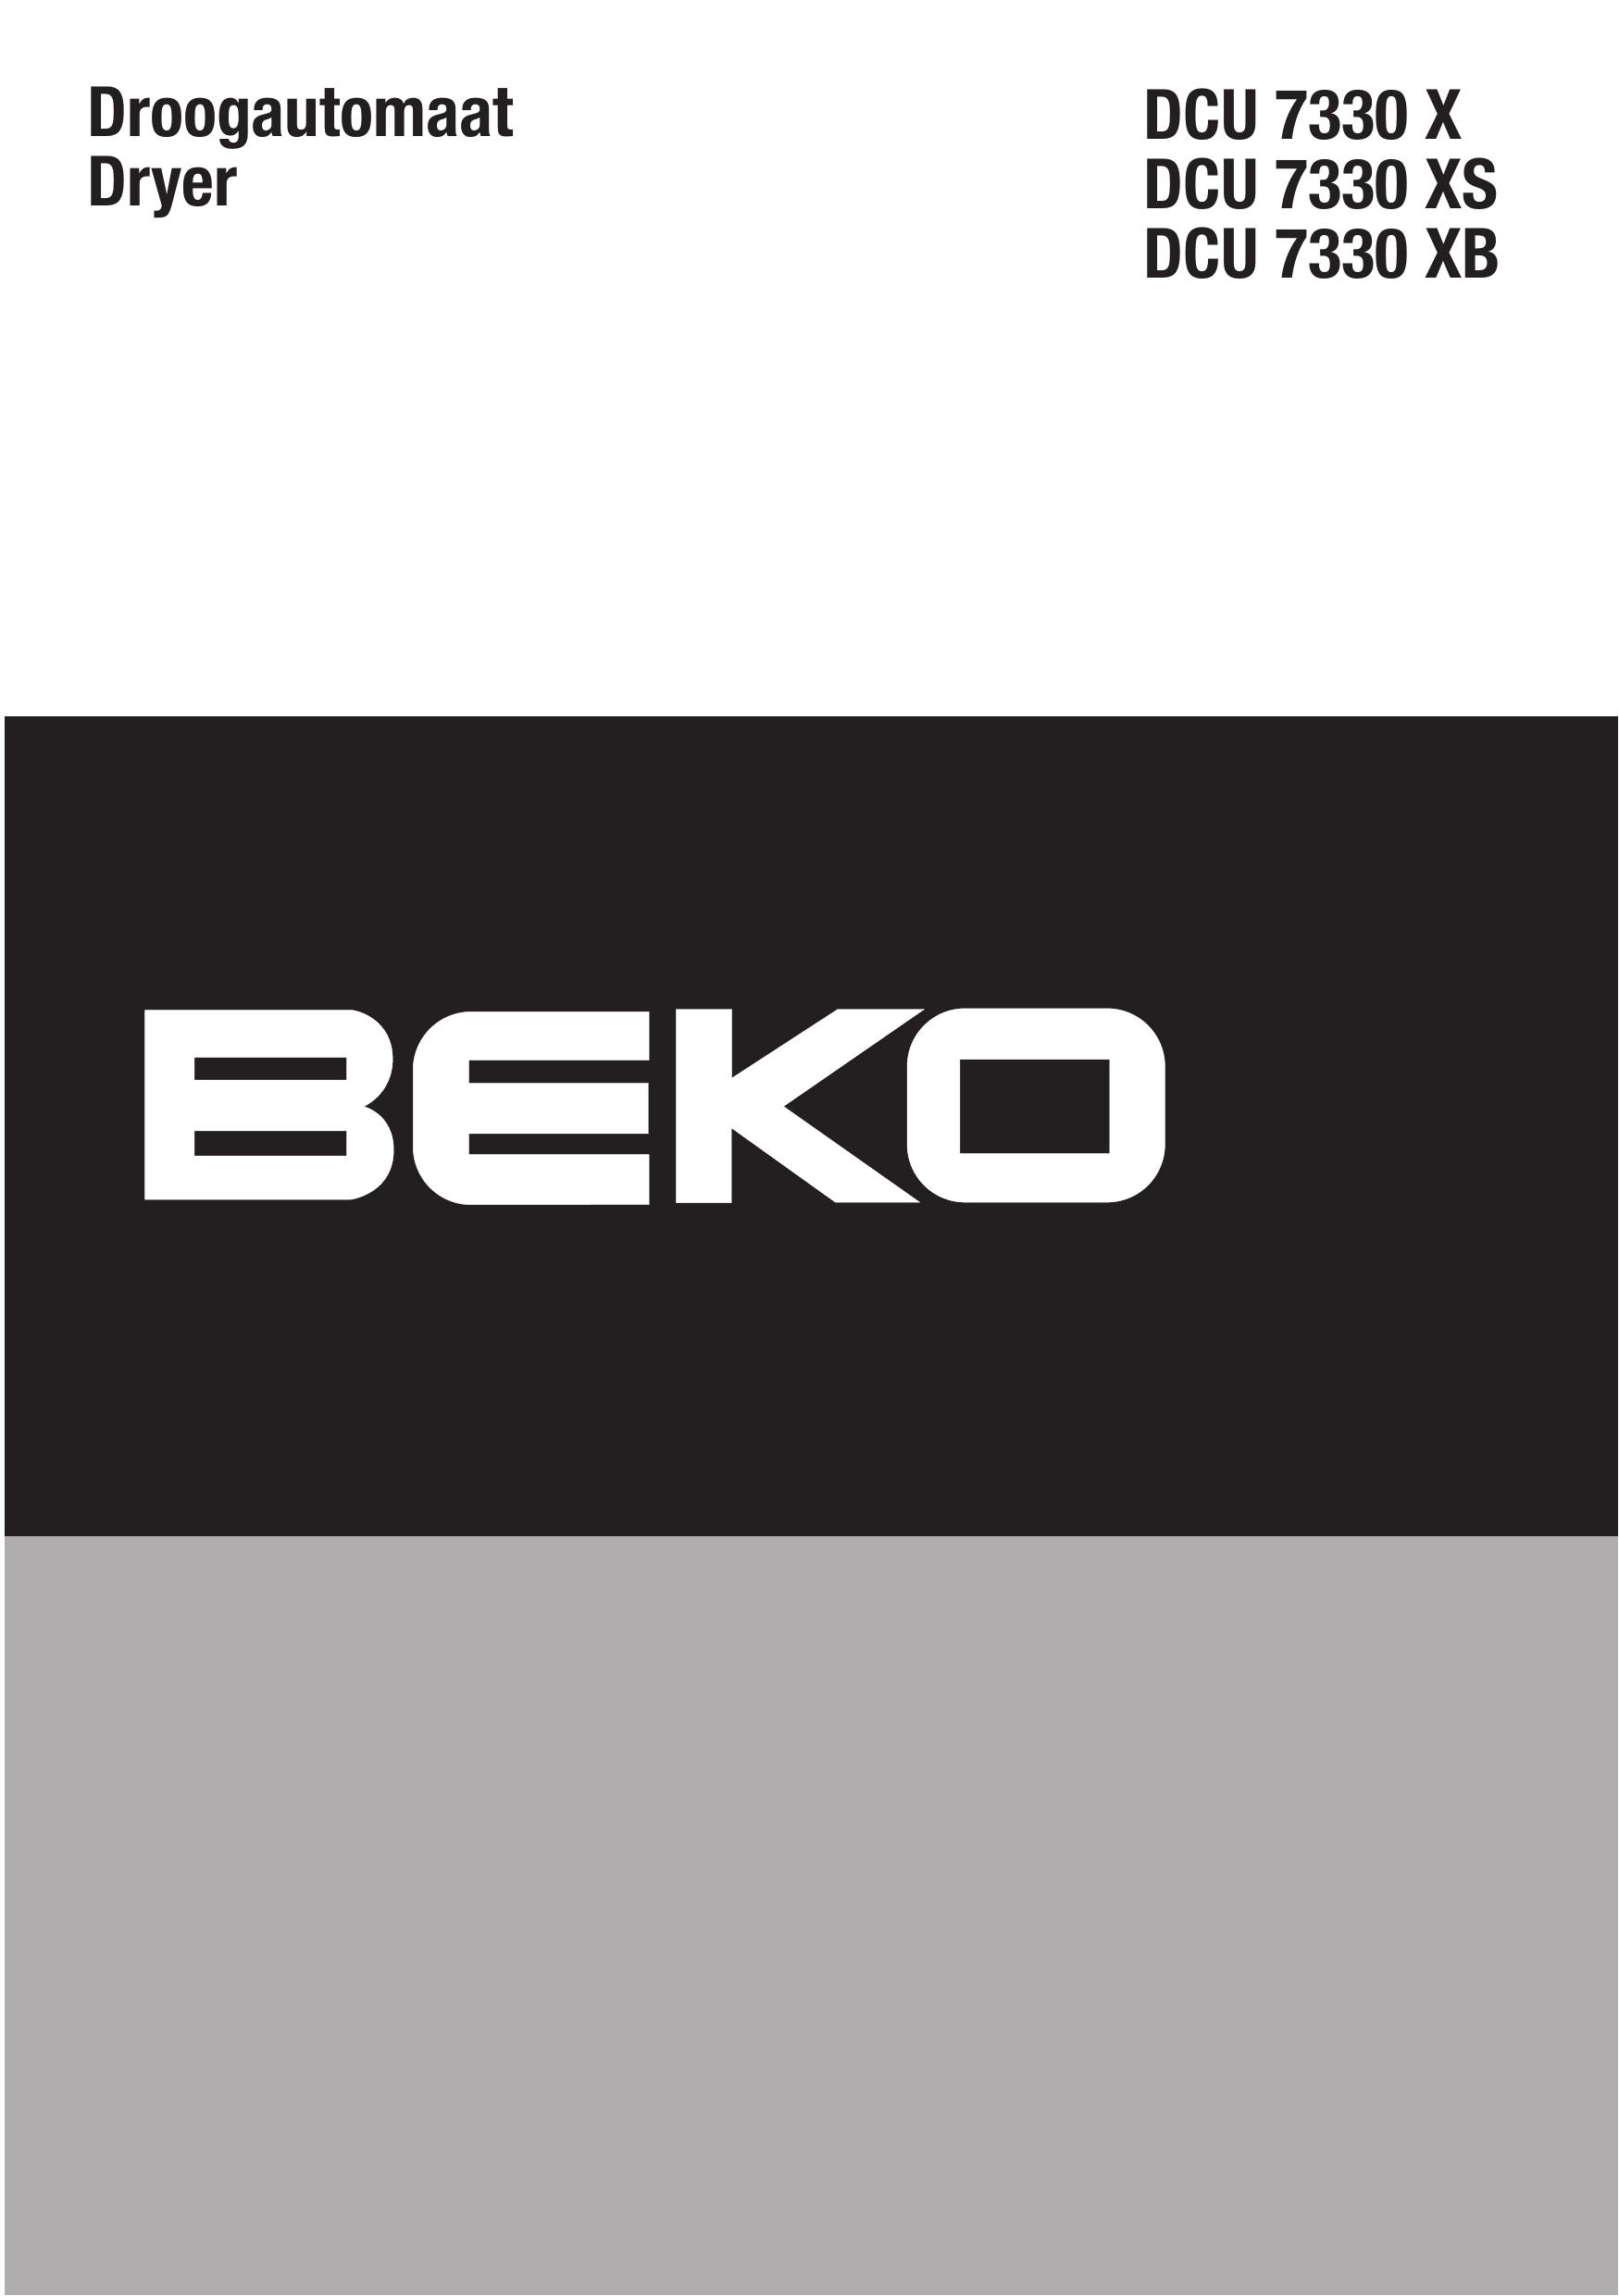 Beko DCU 7330 XS Dryer Accessories User Manual